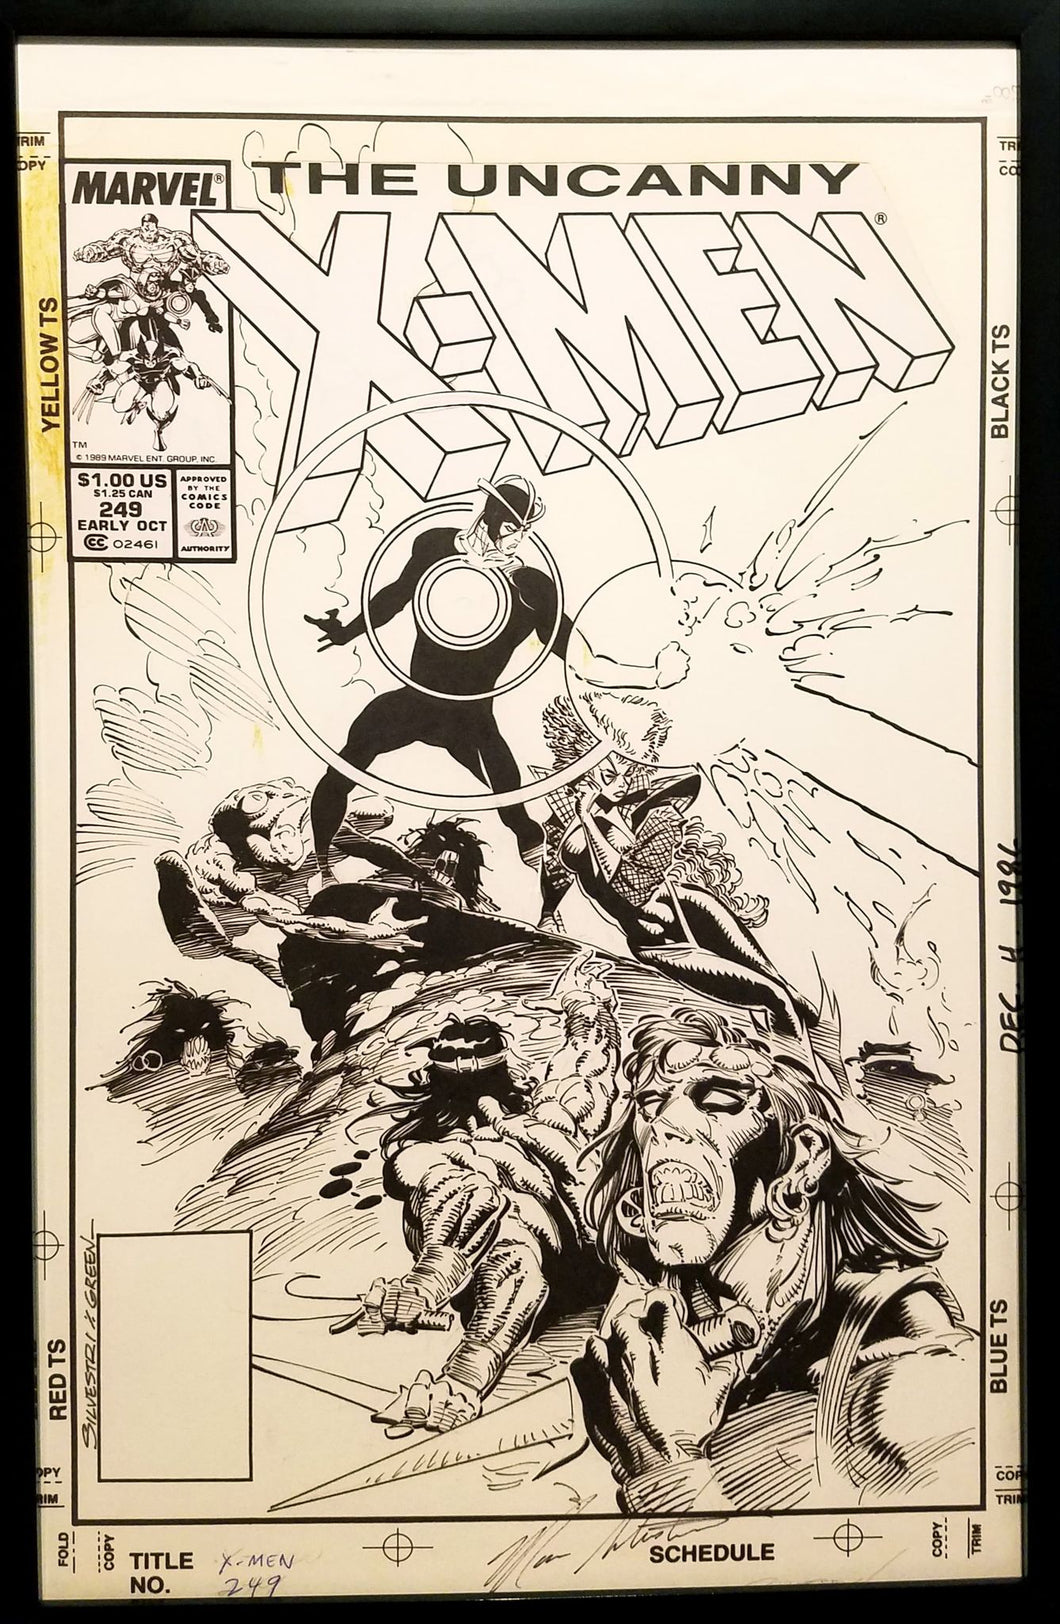 Uncanny X-Men #249 Marc Silvestri 11x17 FRAMED Original Art Poster Marvel Comics